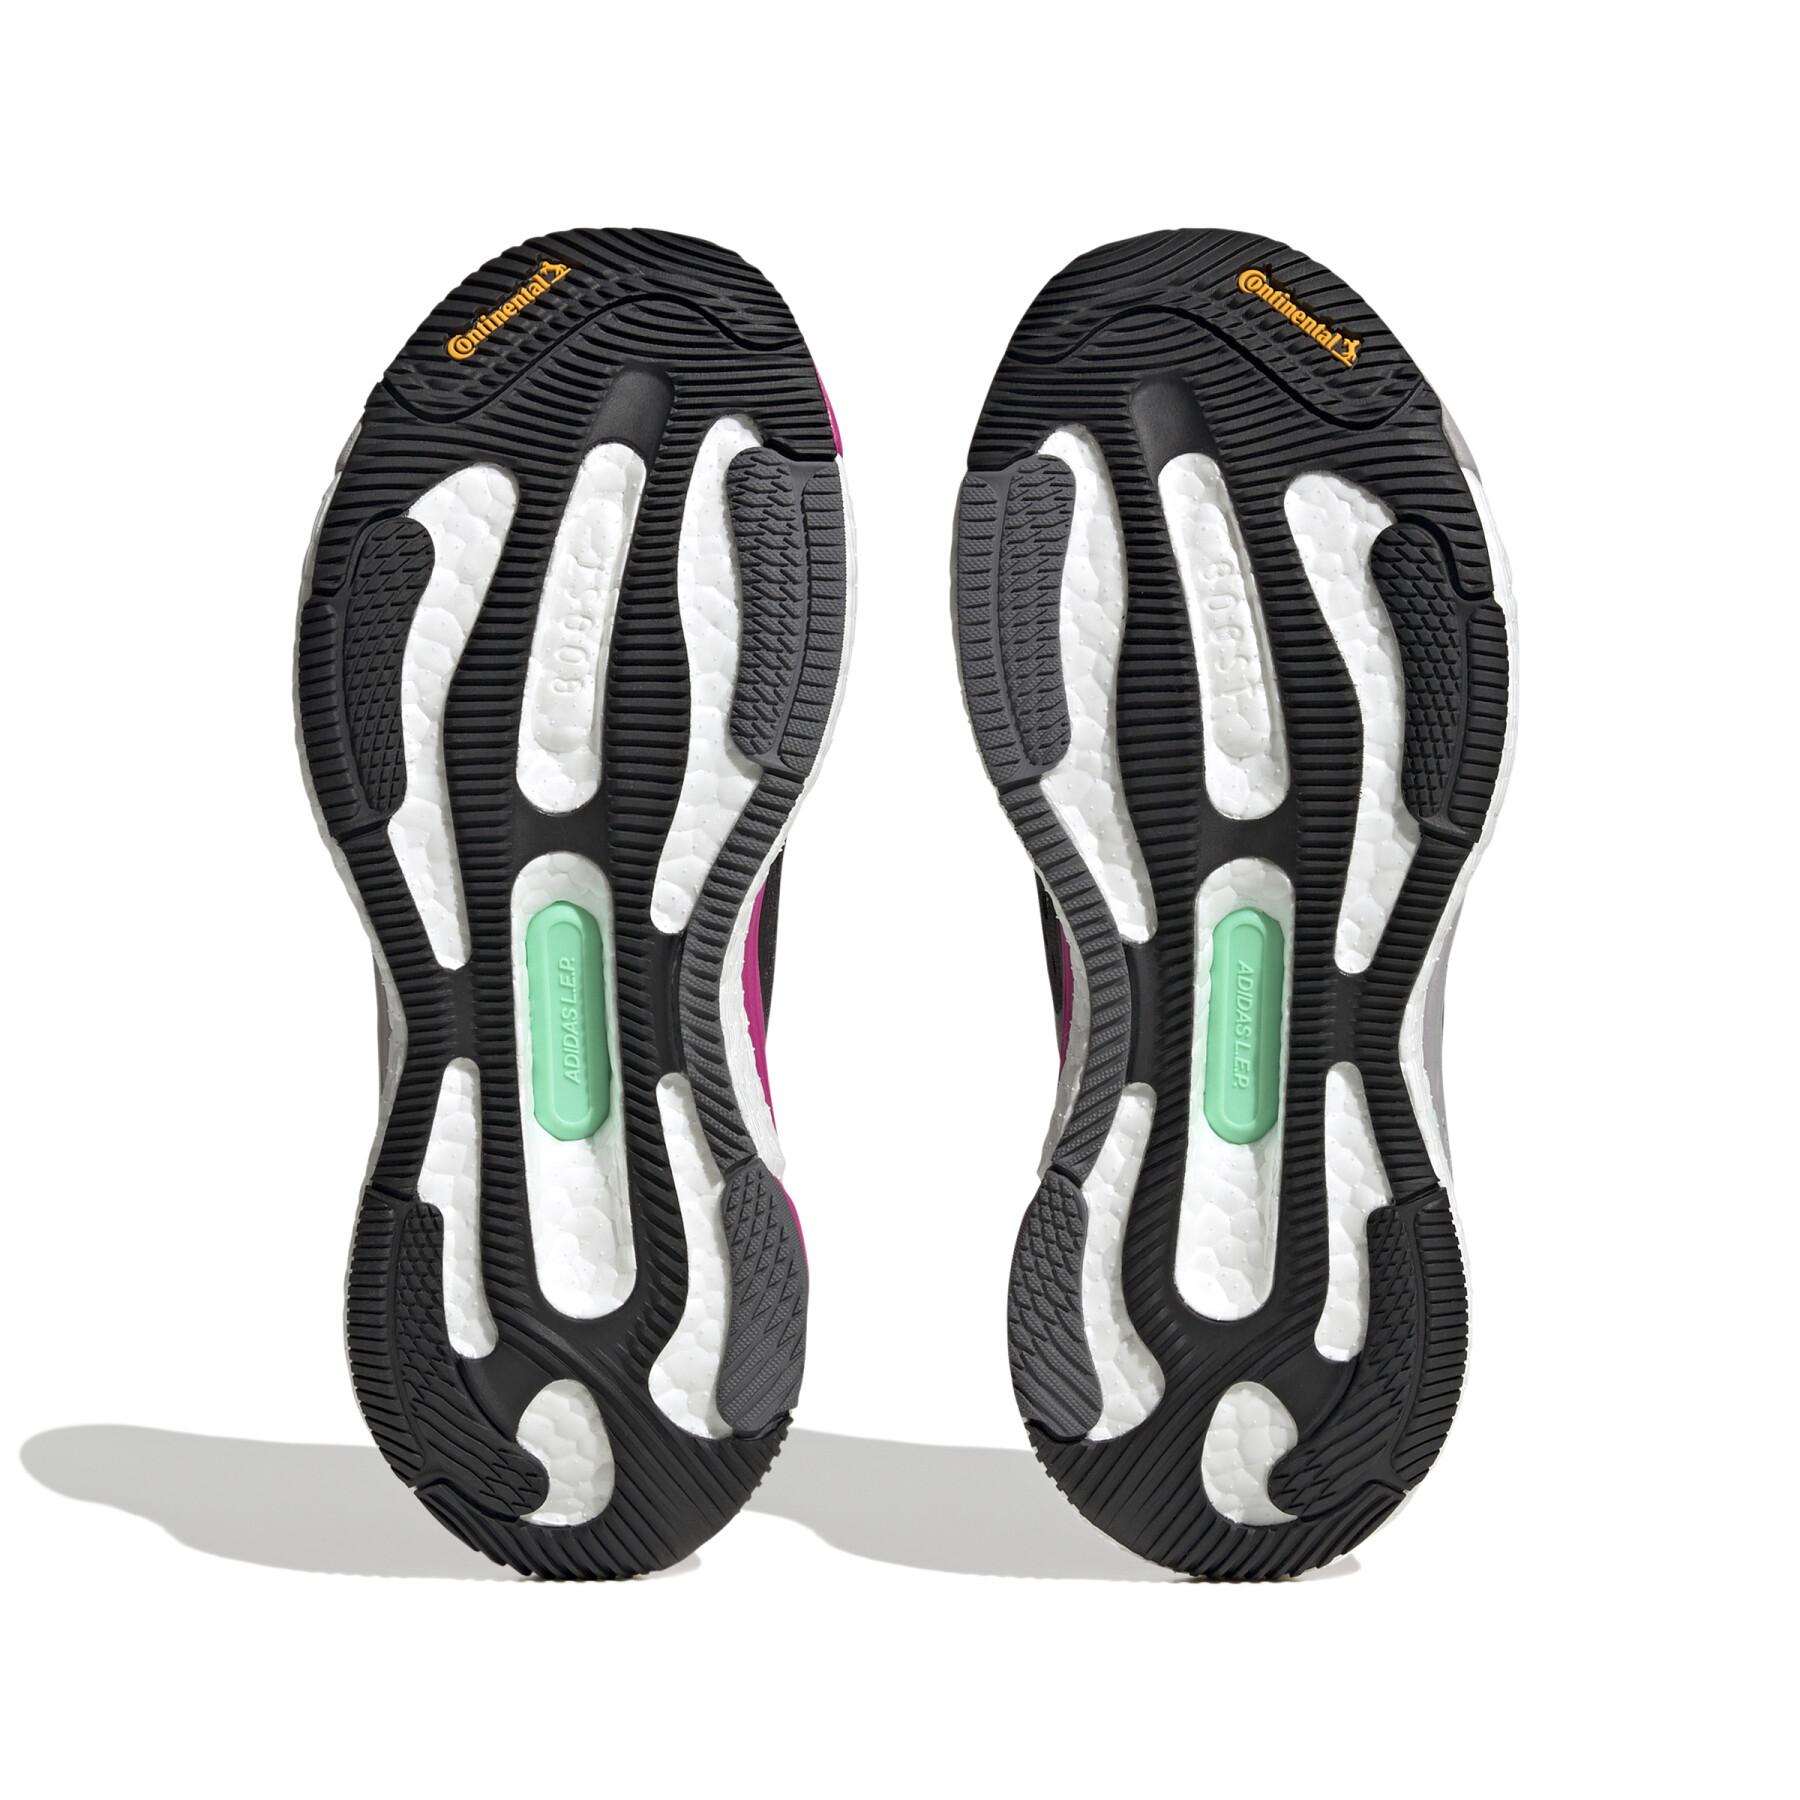 Damen-Laufschuhe adidas Solarcontrol